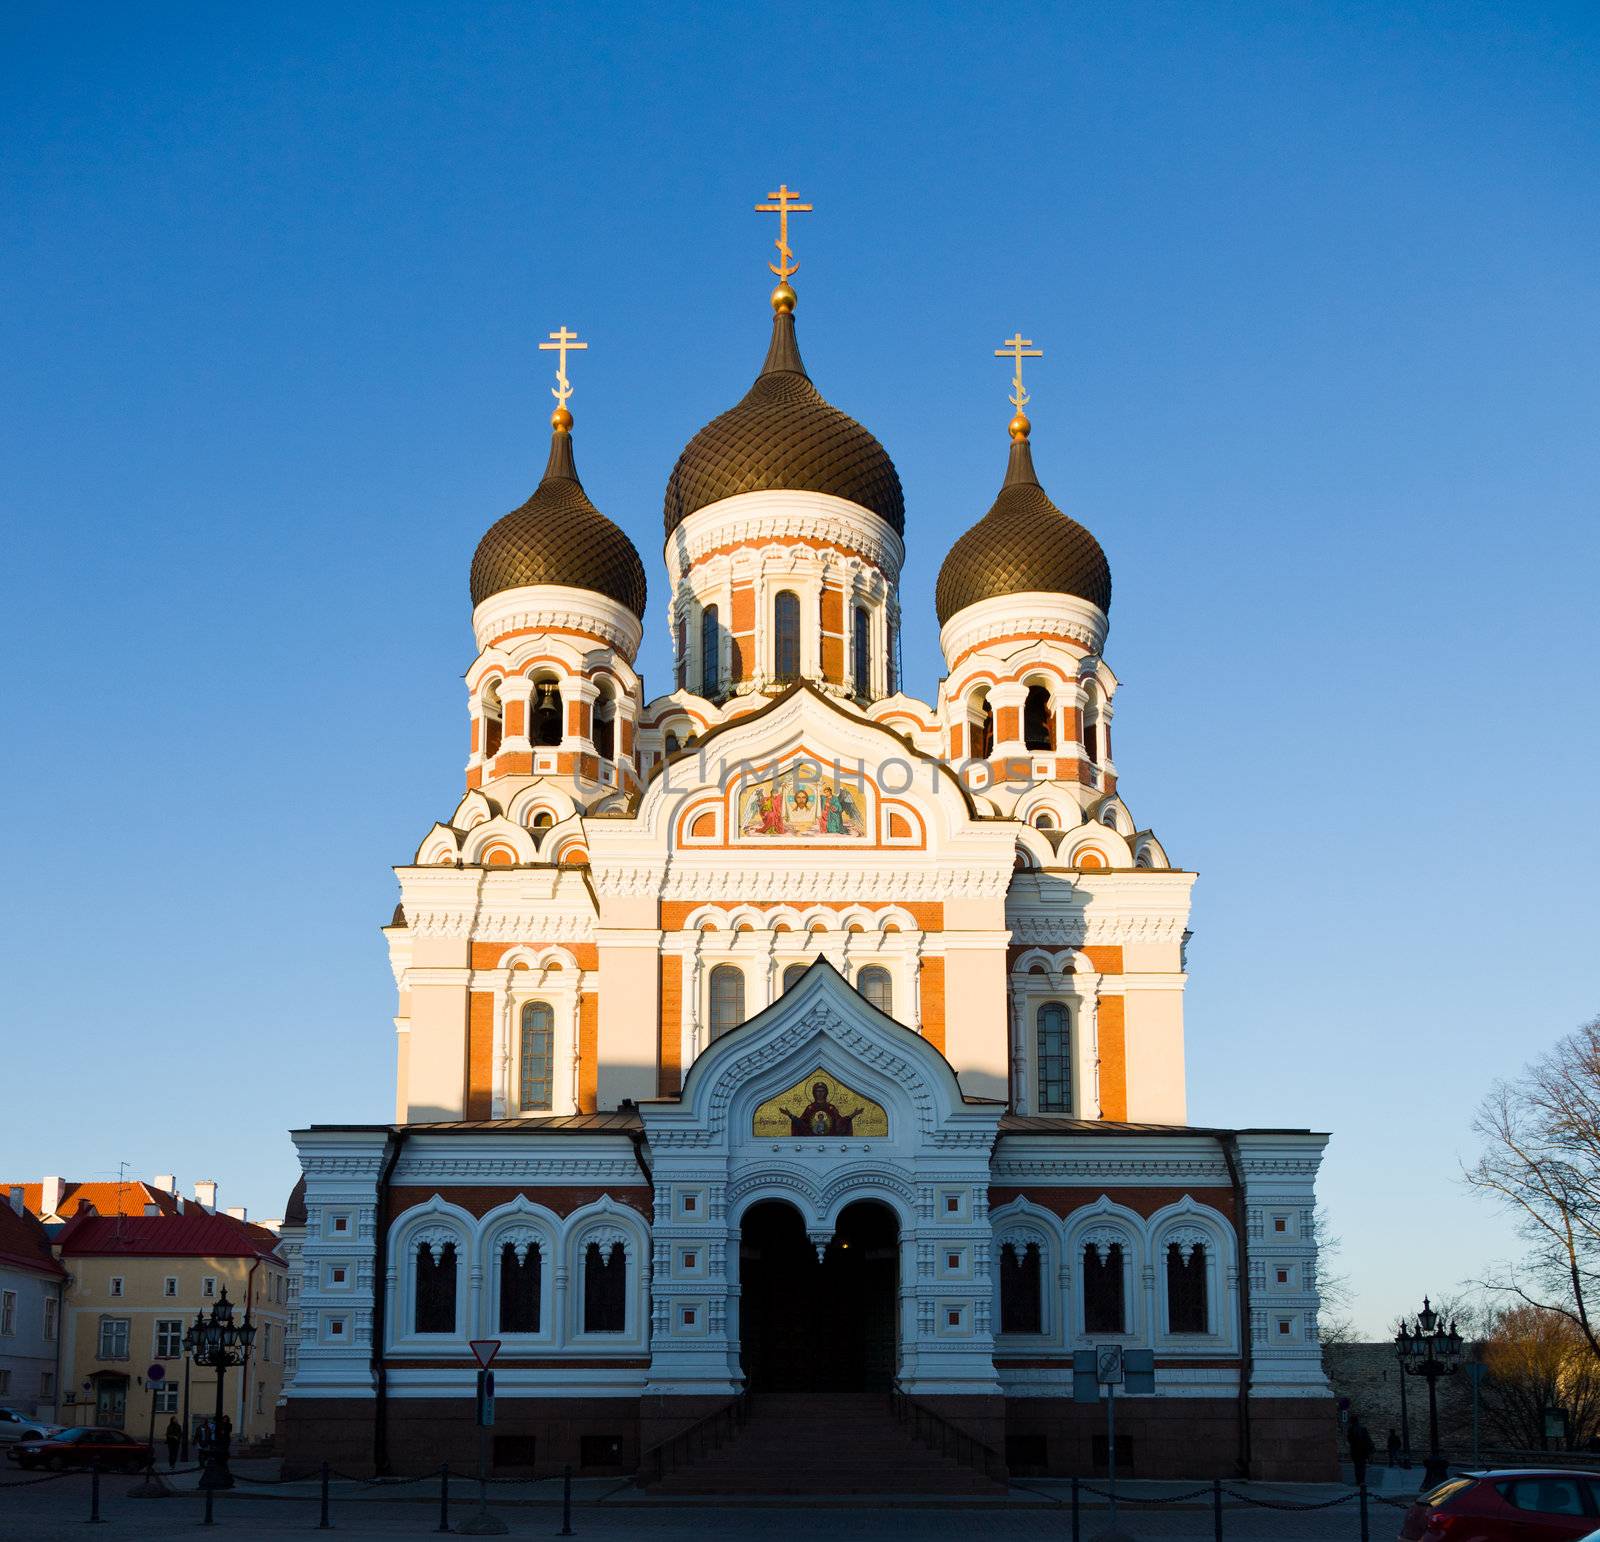 Eastern orthodox church of Alexander Nevsky in Toompea area of Tallinn in Estonia